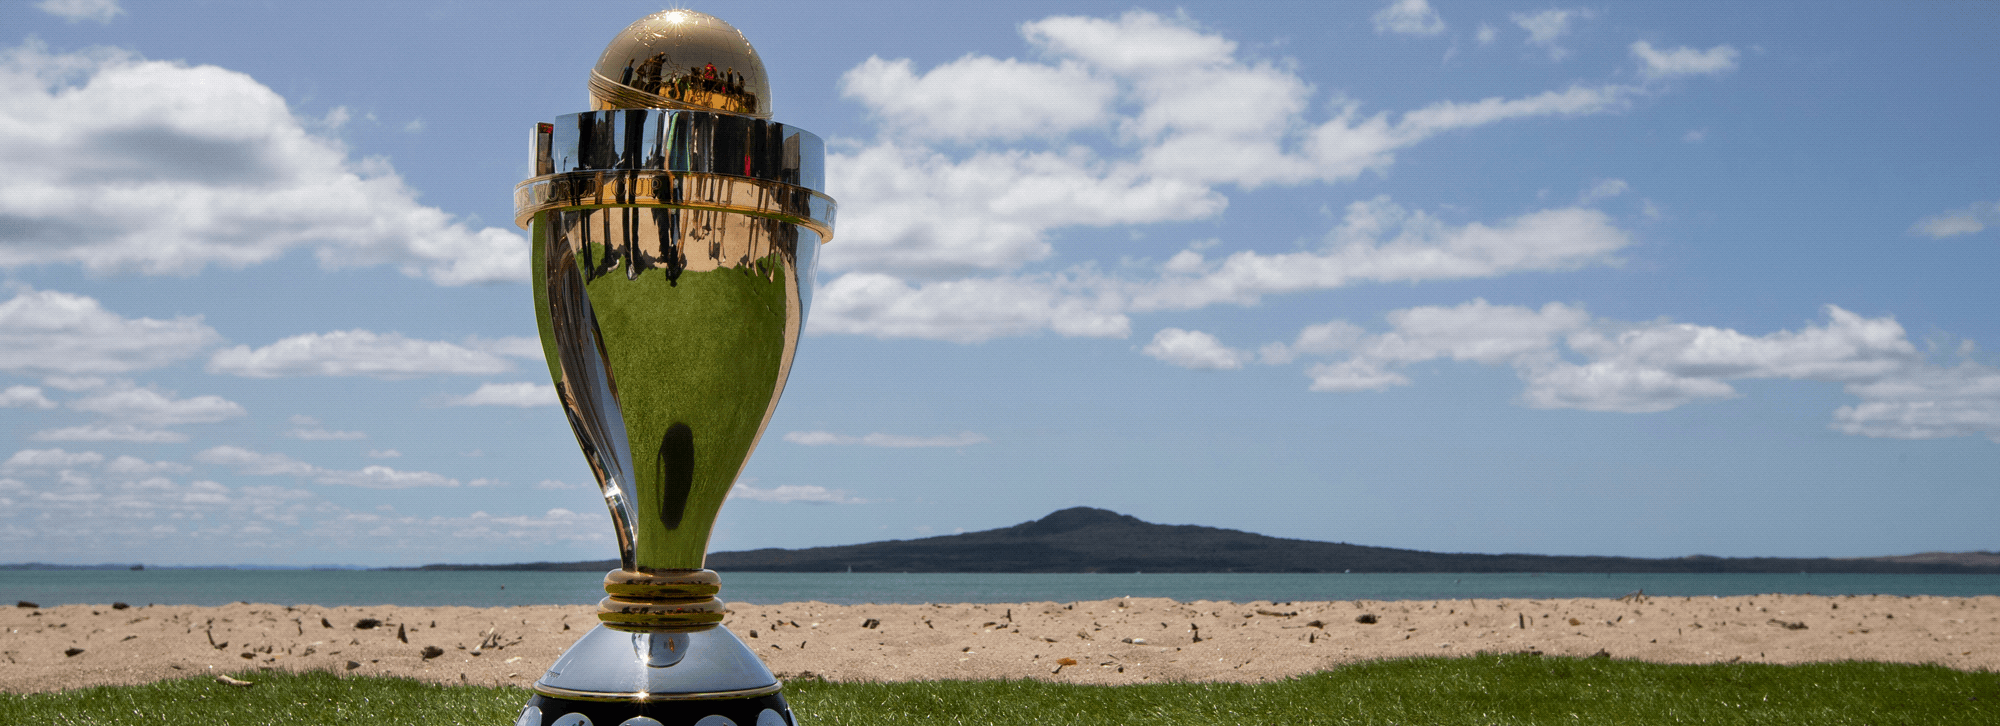 ICC Women's Cricket World Cup postponed until 2022